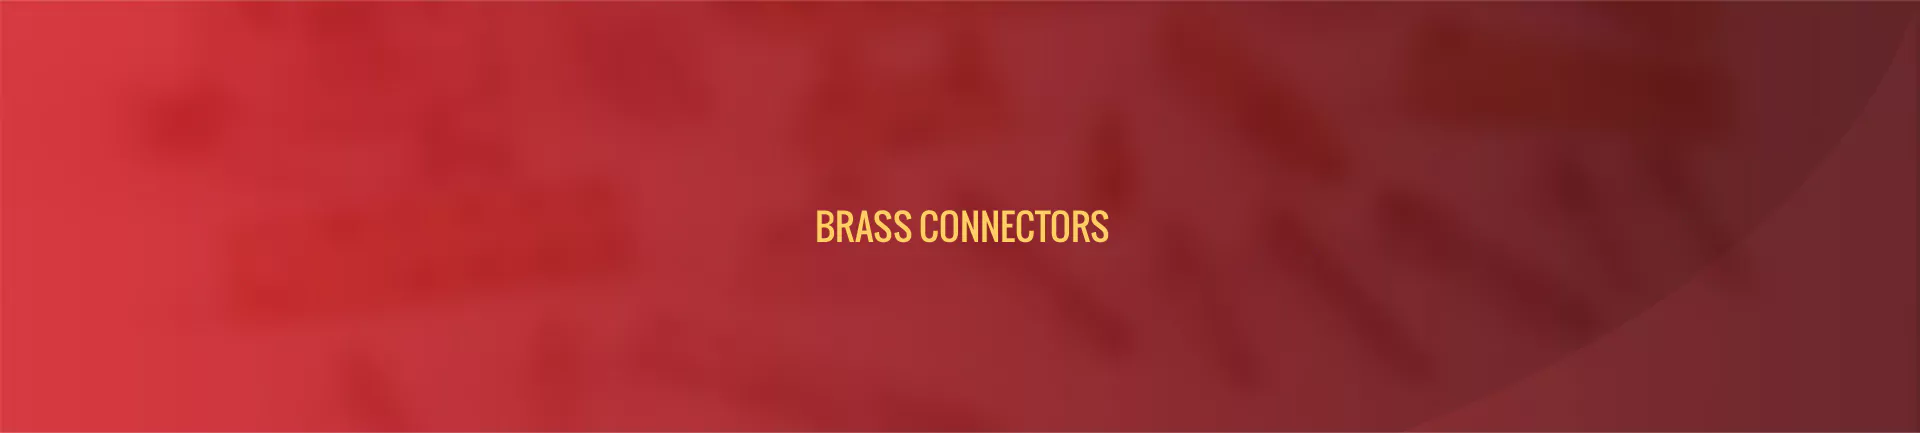 brass-connectors-banner